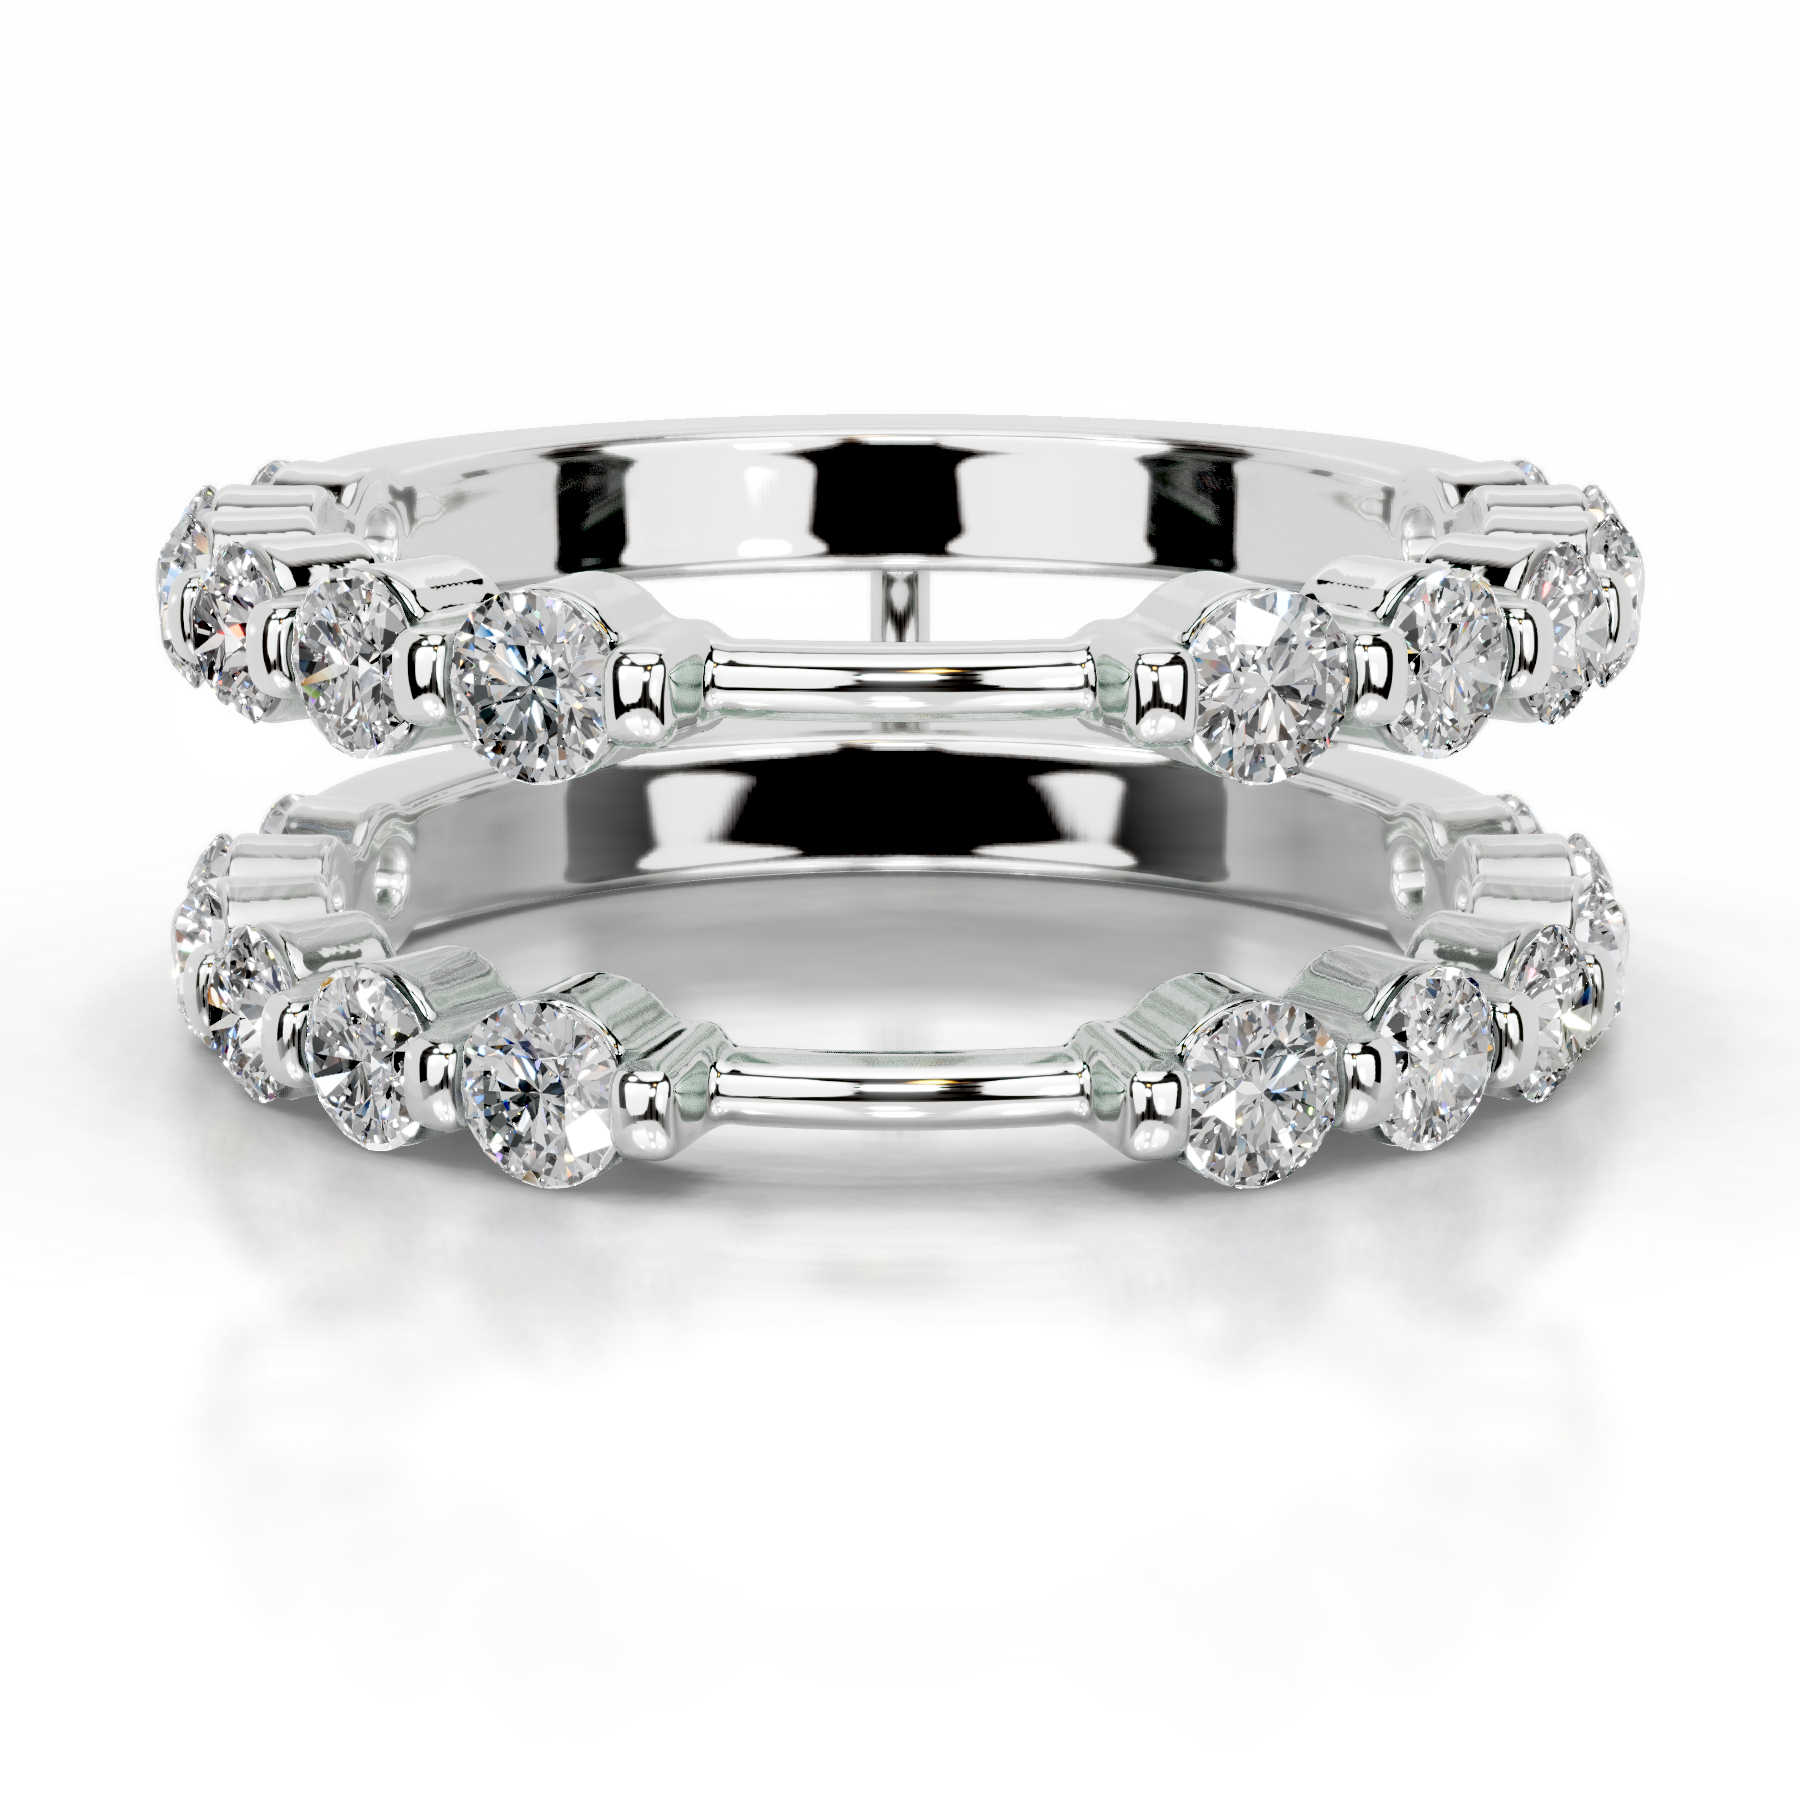 Ashley Diamond Wedding Ring   (1.25 Carat) -18K White Gold